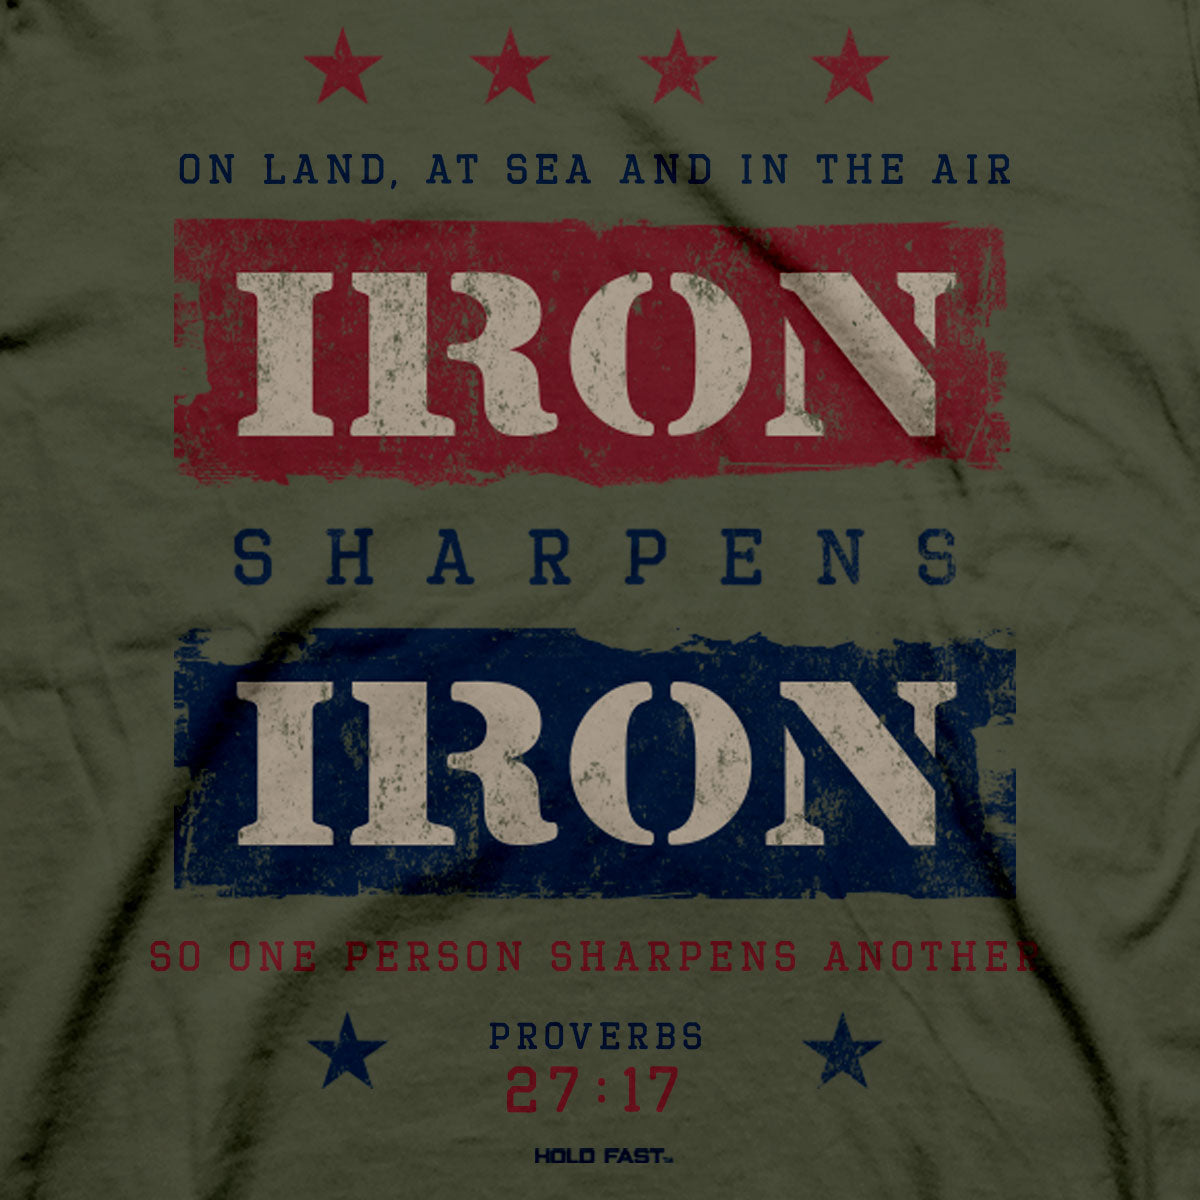 HOLD FAST Mens T-Shirt Iron Sharpens Iron Proverbs 27:17